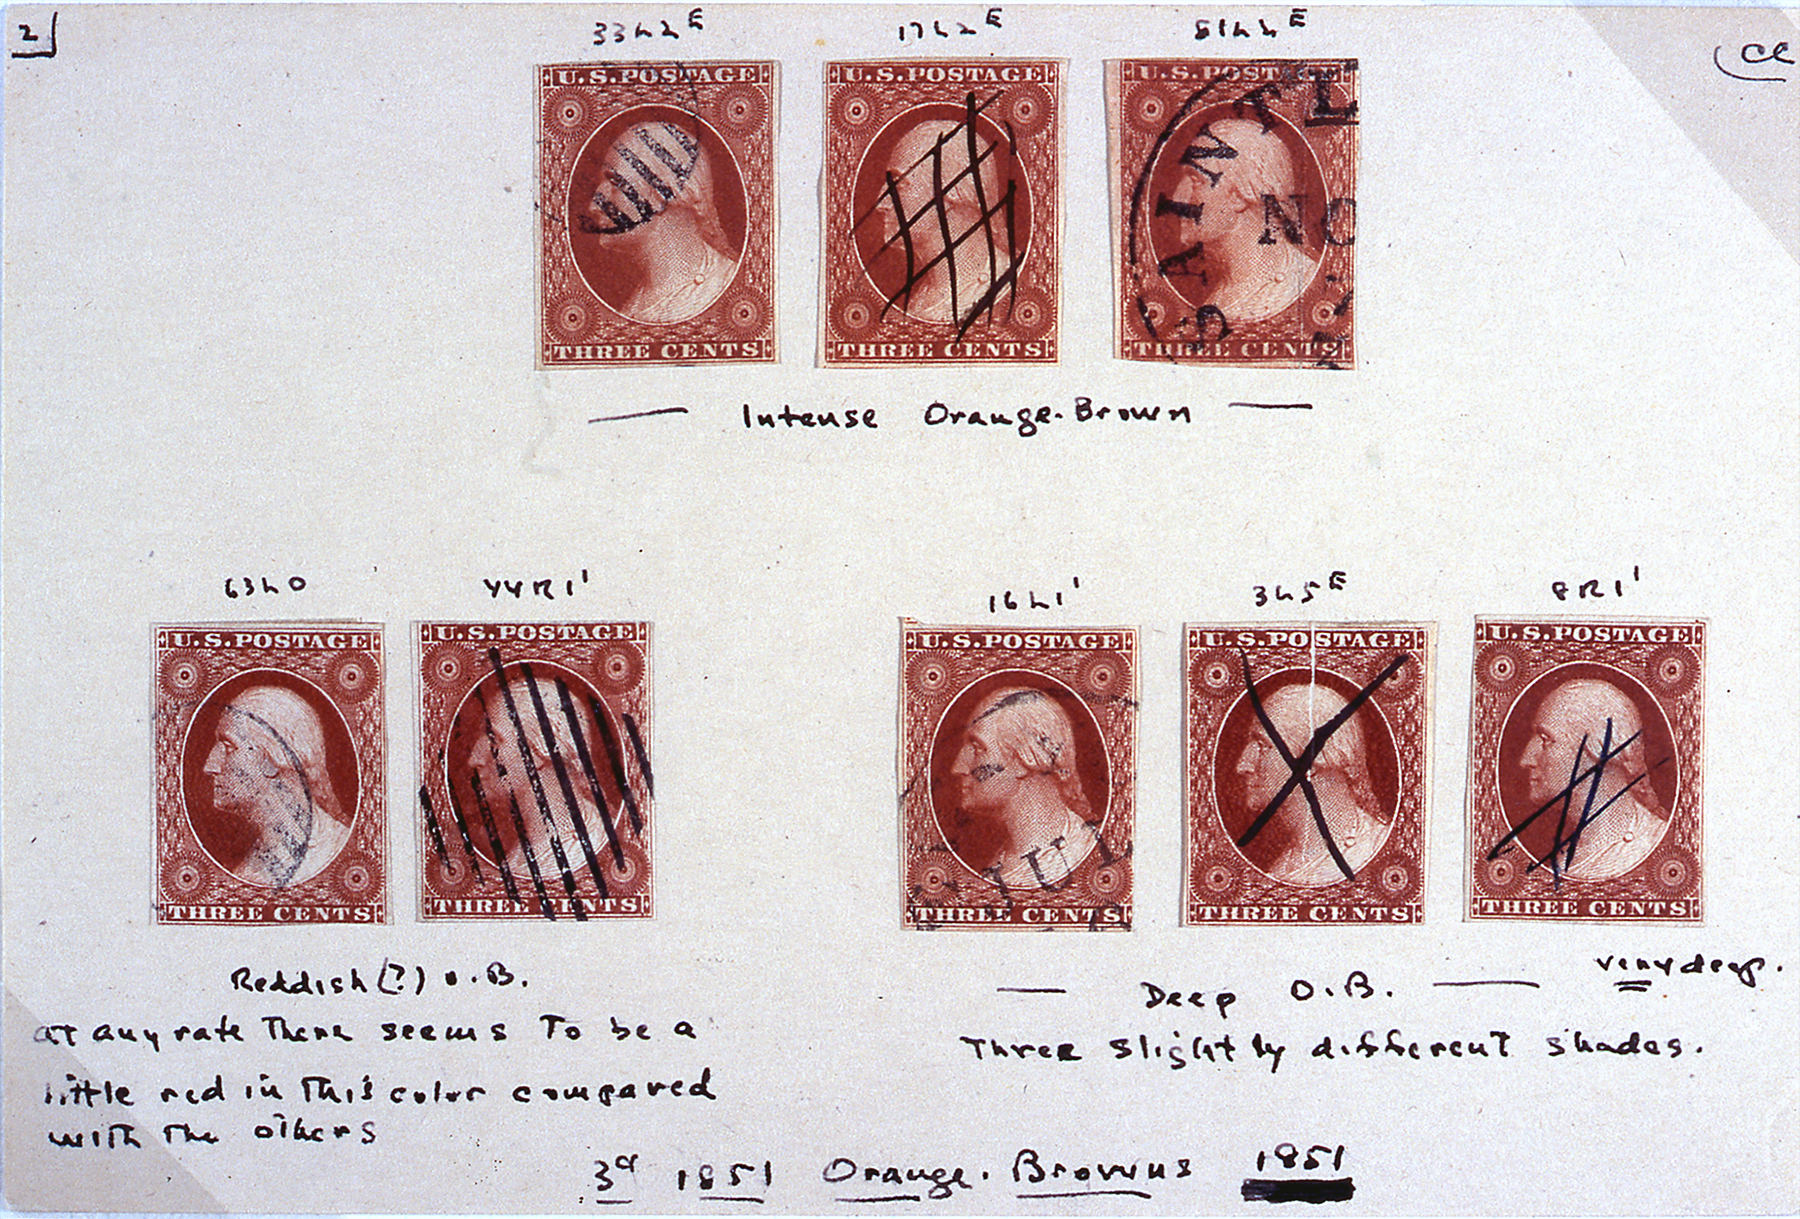 Postage Stamp Color Chart